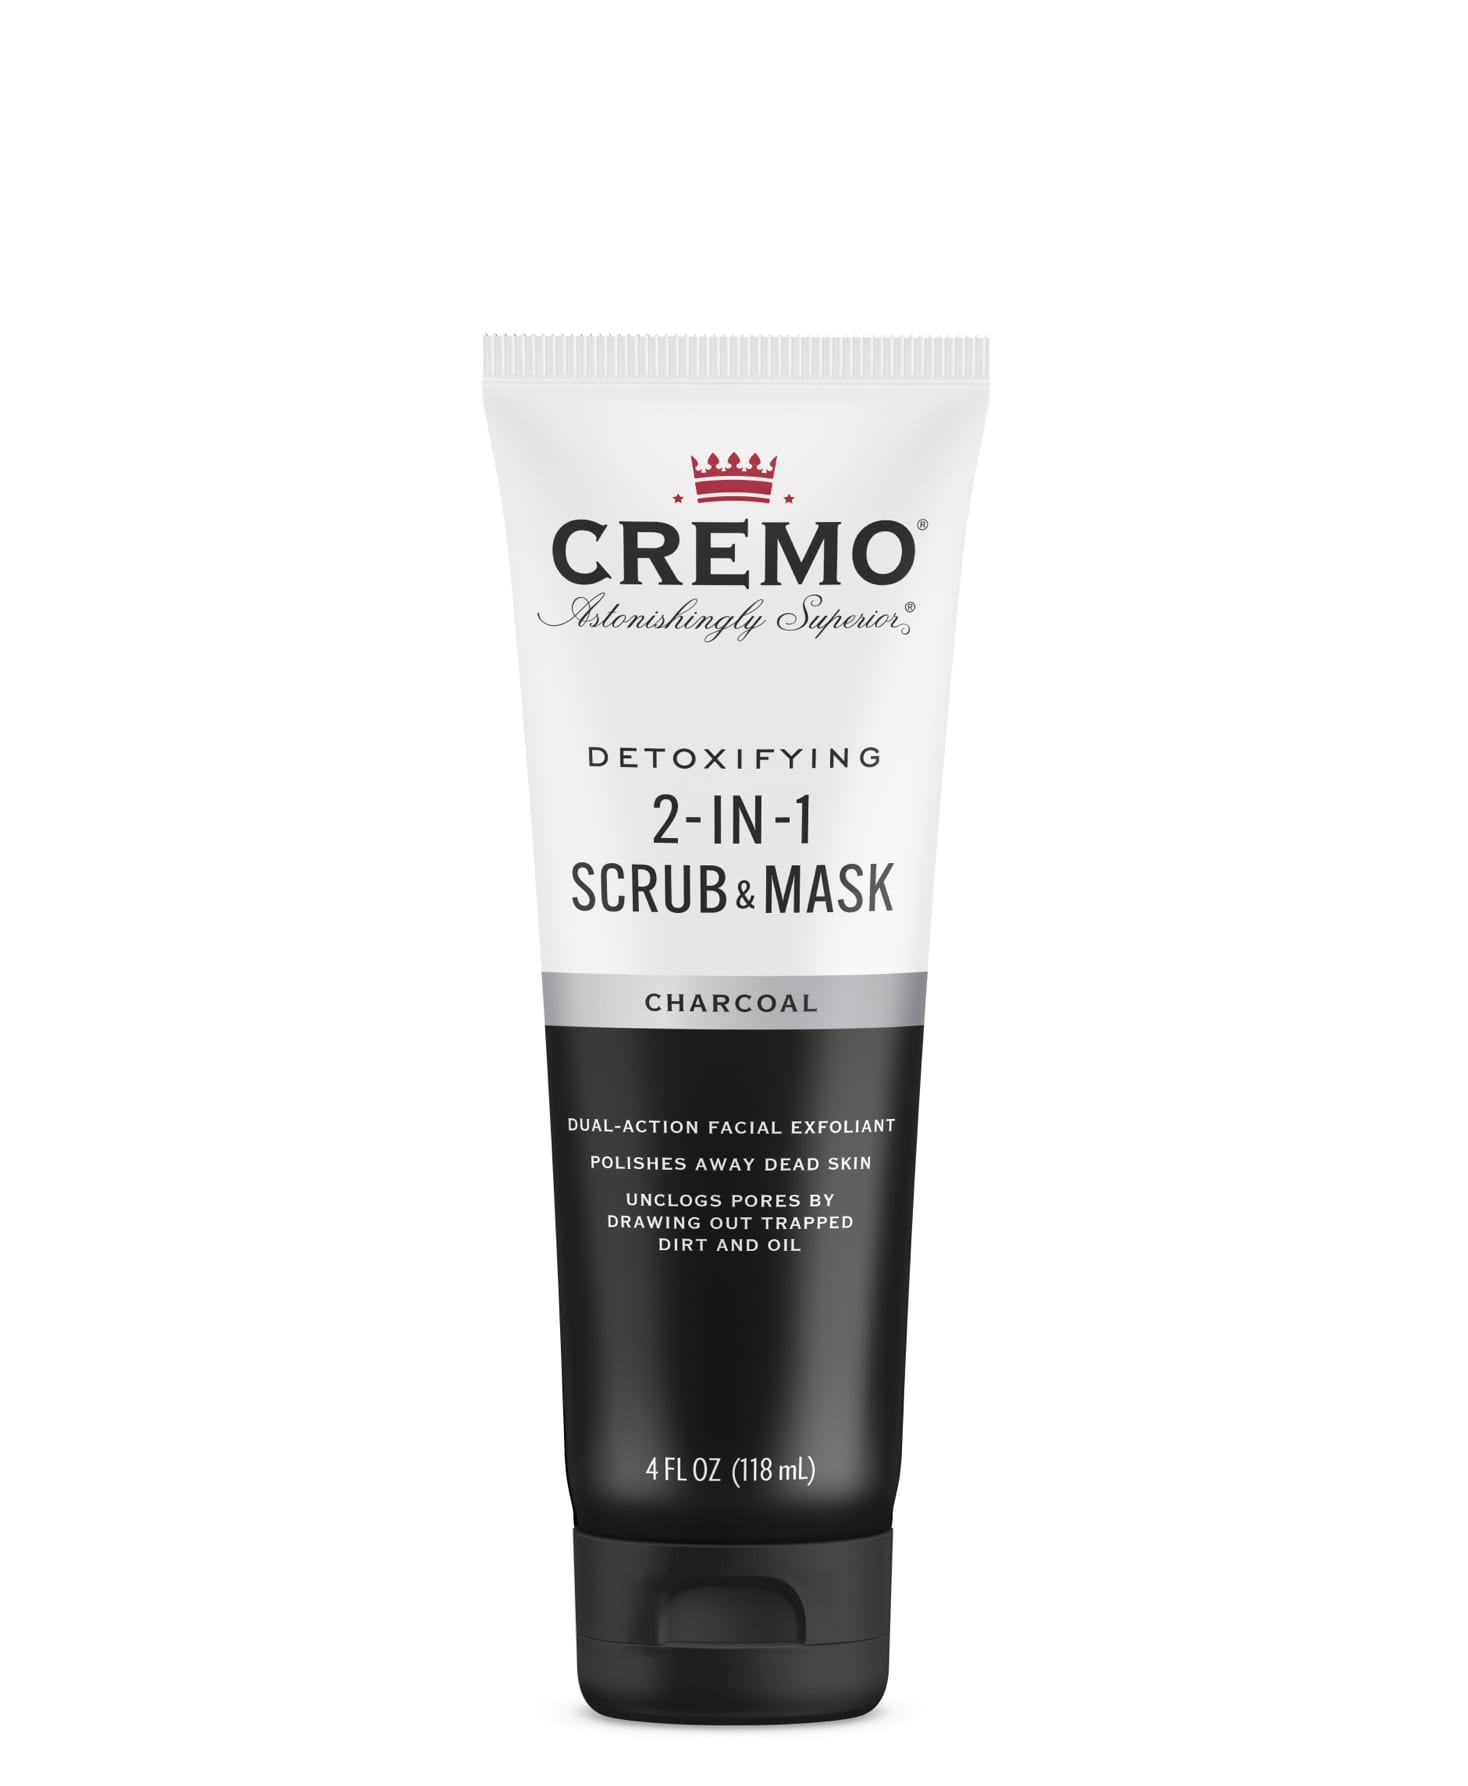 Cremo Scrub & Mask, Detoxifying, 2-in-1, Charcoal - 4 fl oz